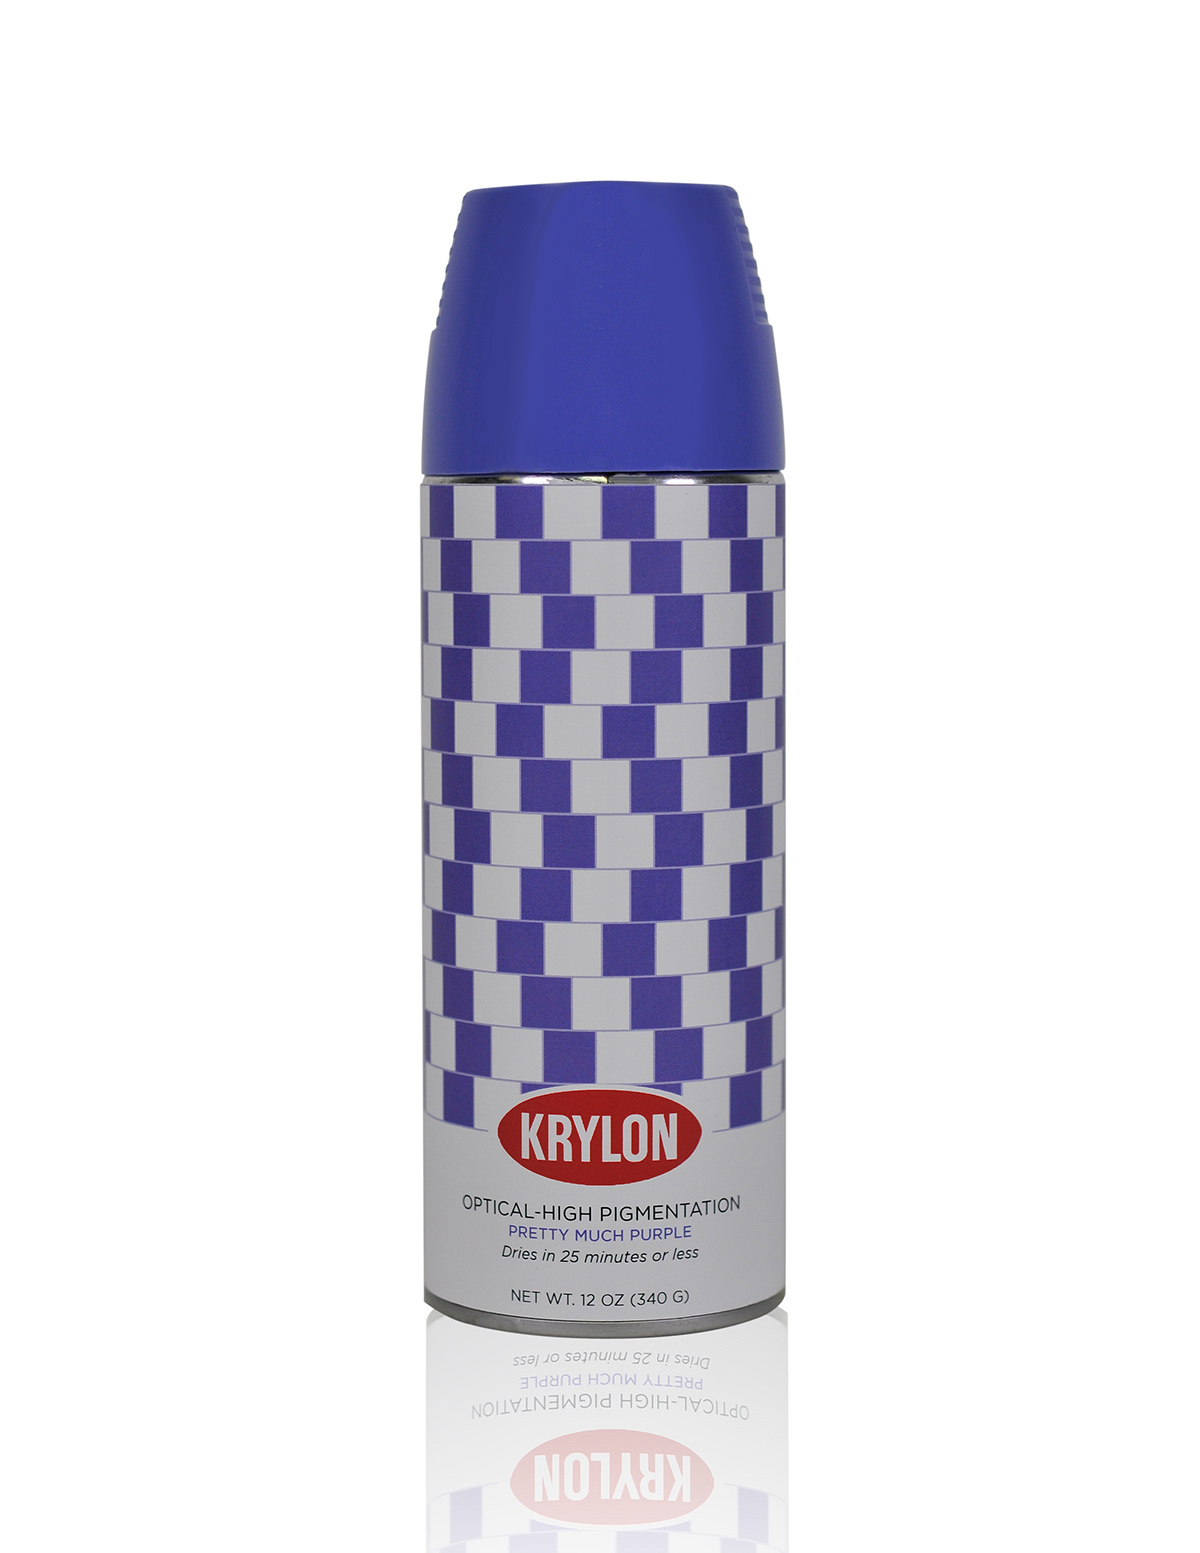 spray paint cans optical illusion pattern black purple green lines shapes krylon optical high pigmentation